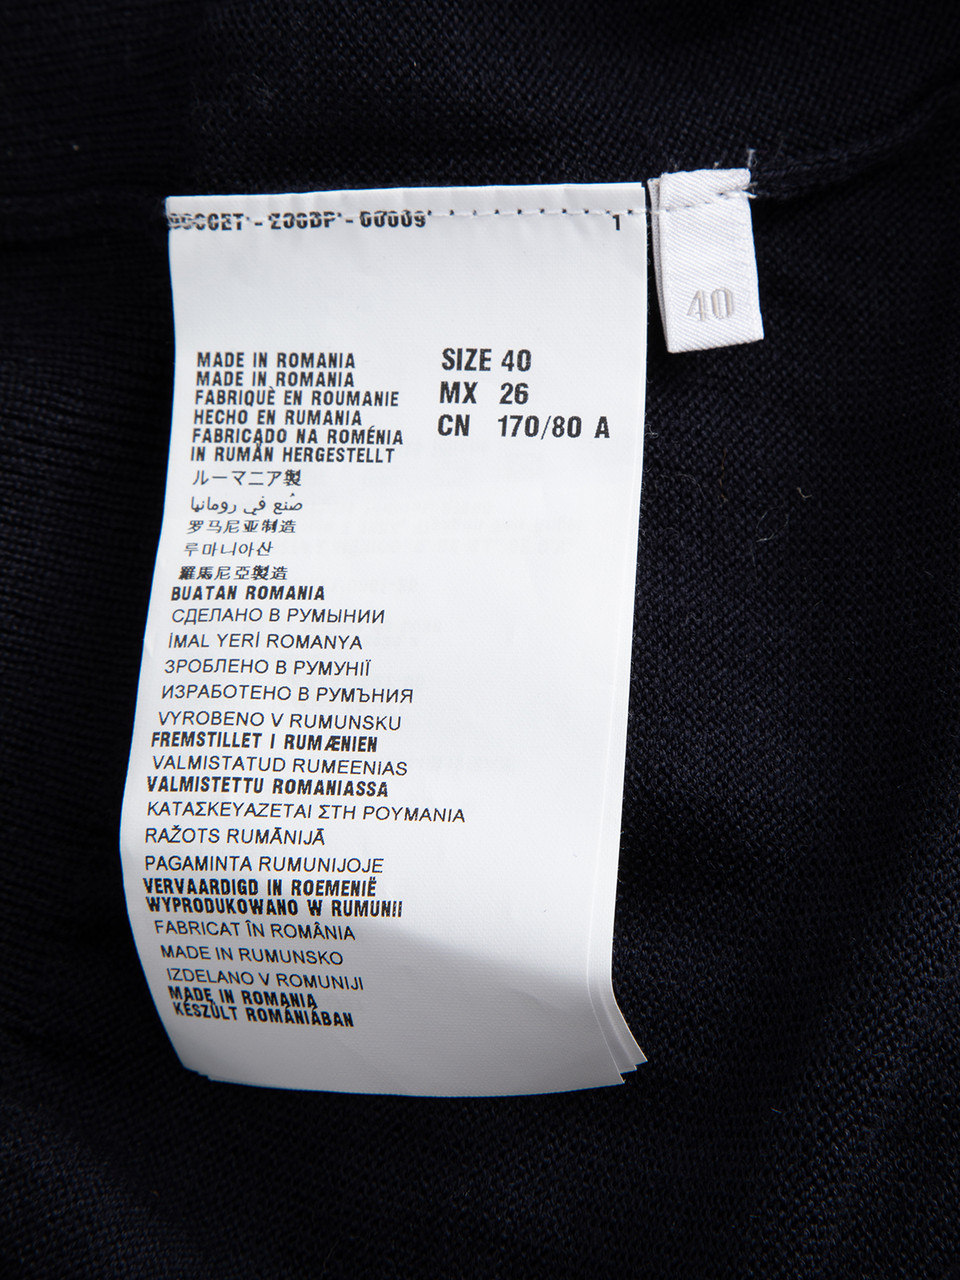 Miu Miu Knit Detail Cardigan - Colour: Navy + Size: UK 8, US 4, FR 36, IT 40, S